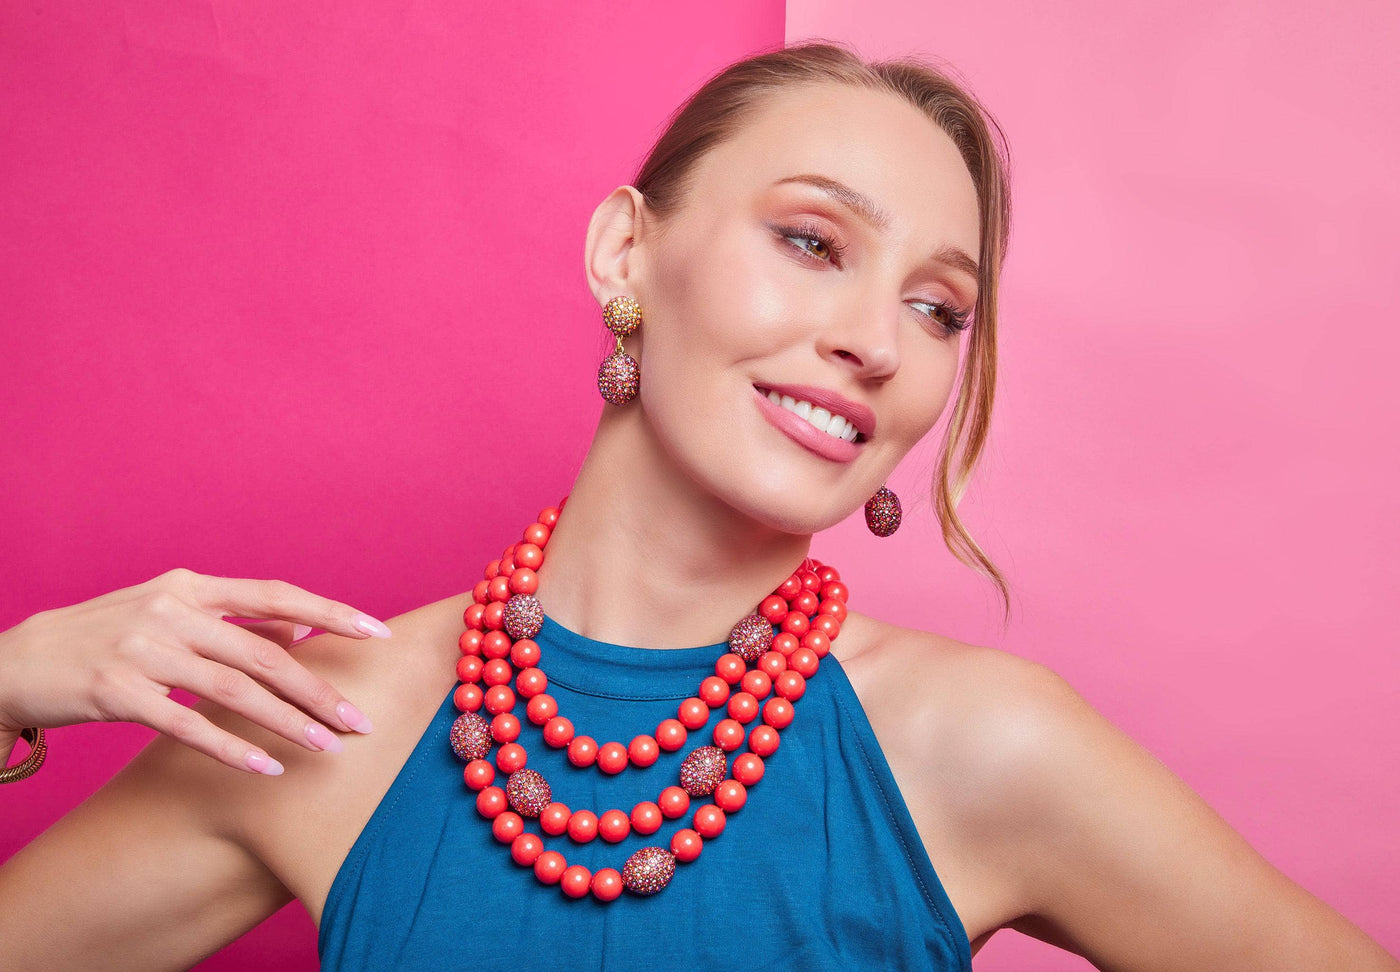 Heidi Daus®"Big Pretty" Beaded Crystal Multi Strand Necklace